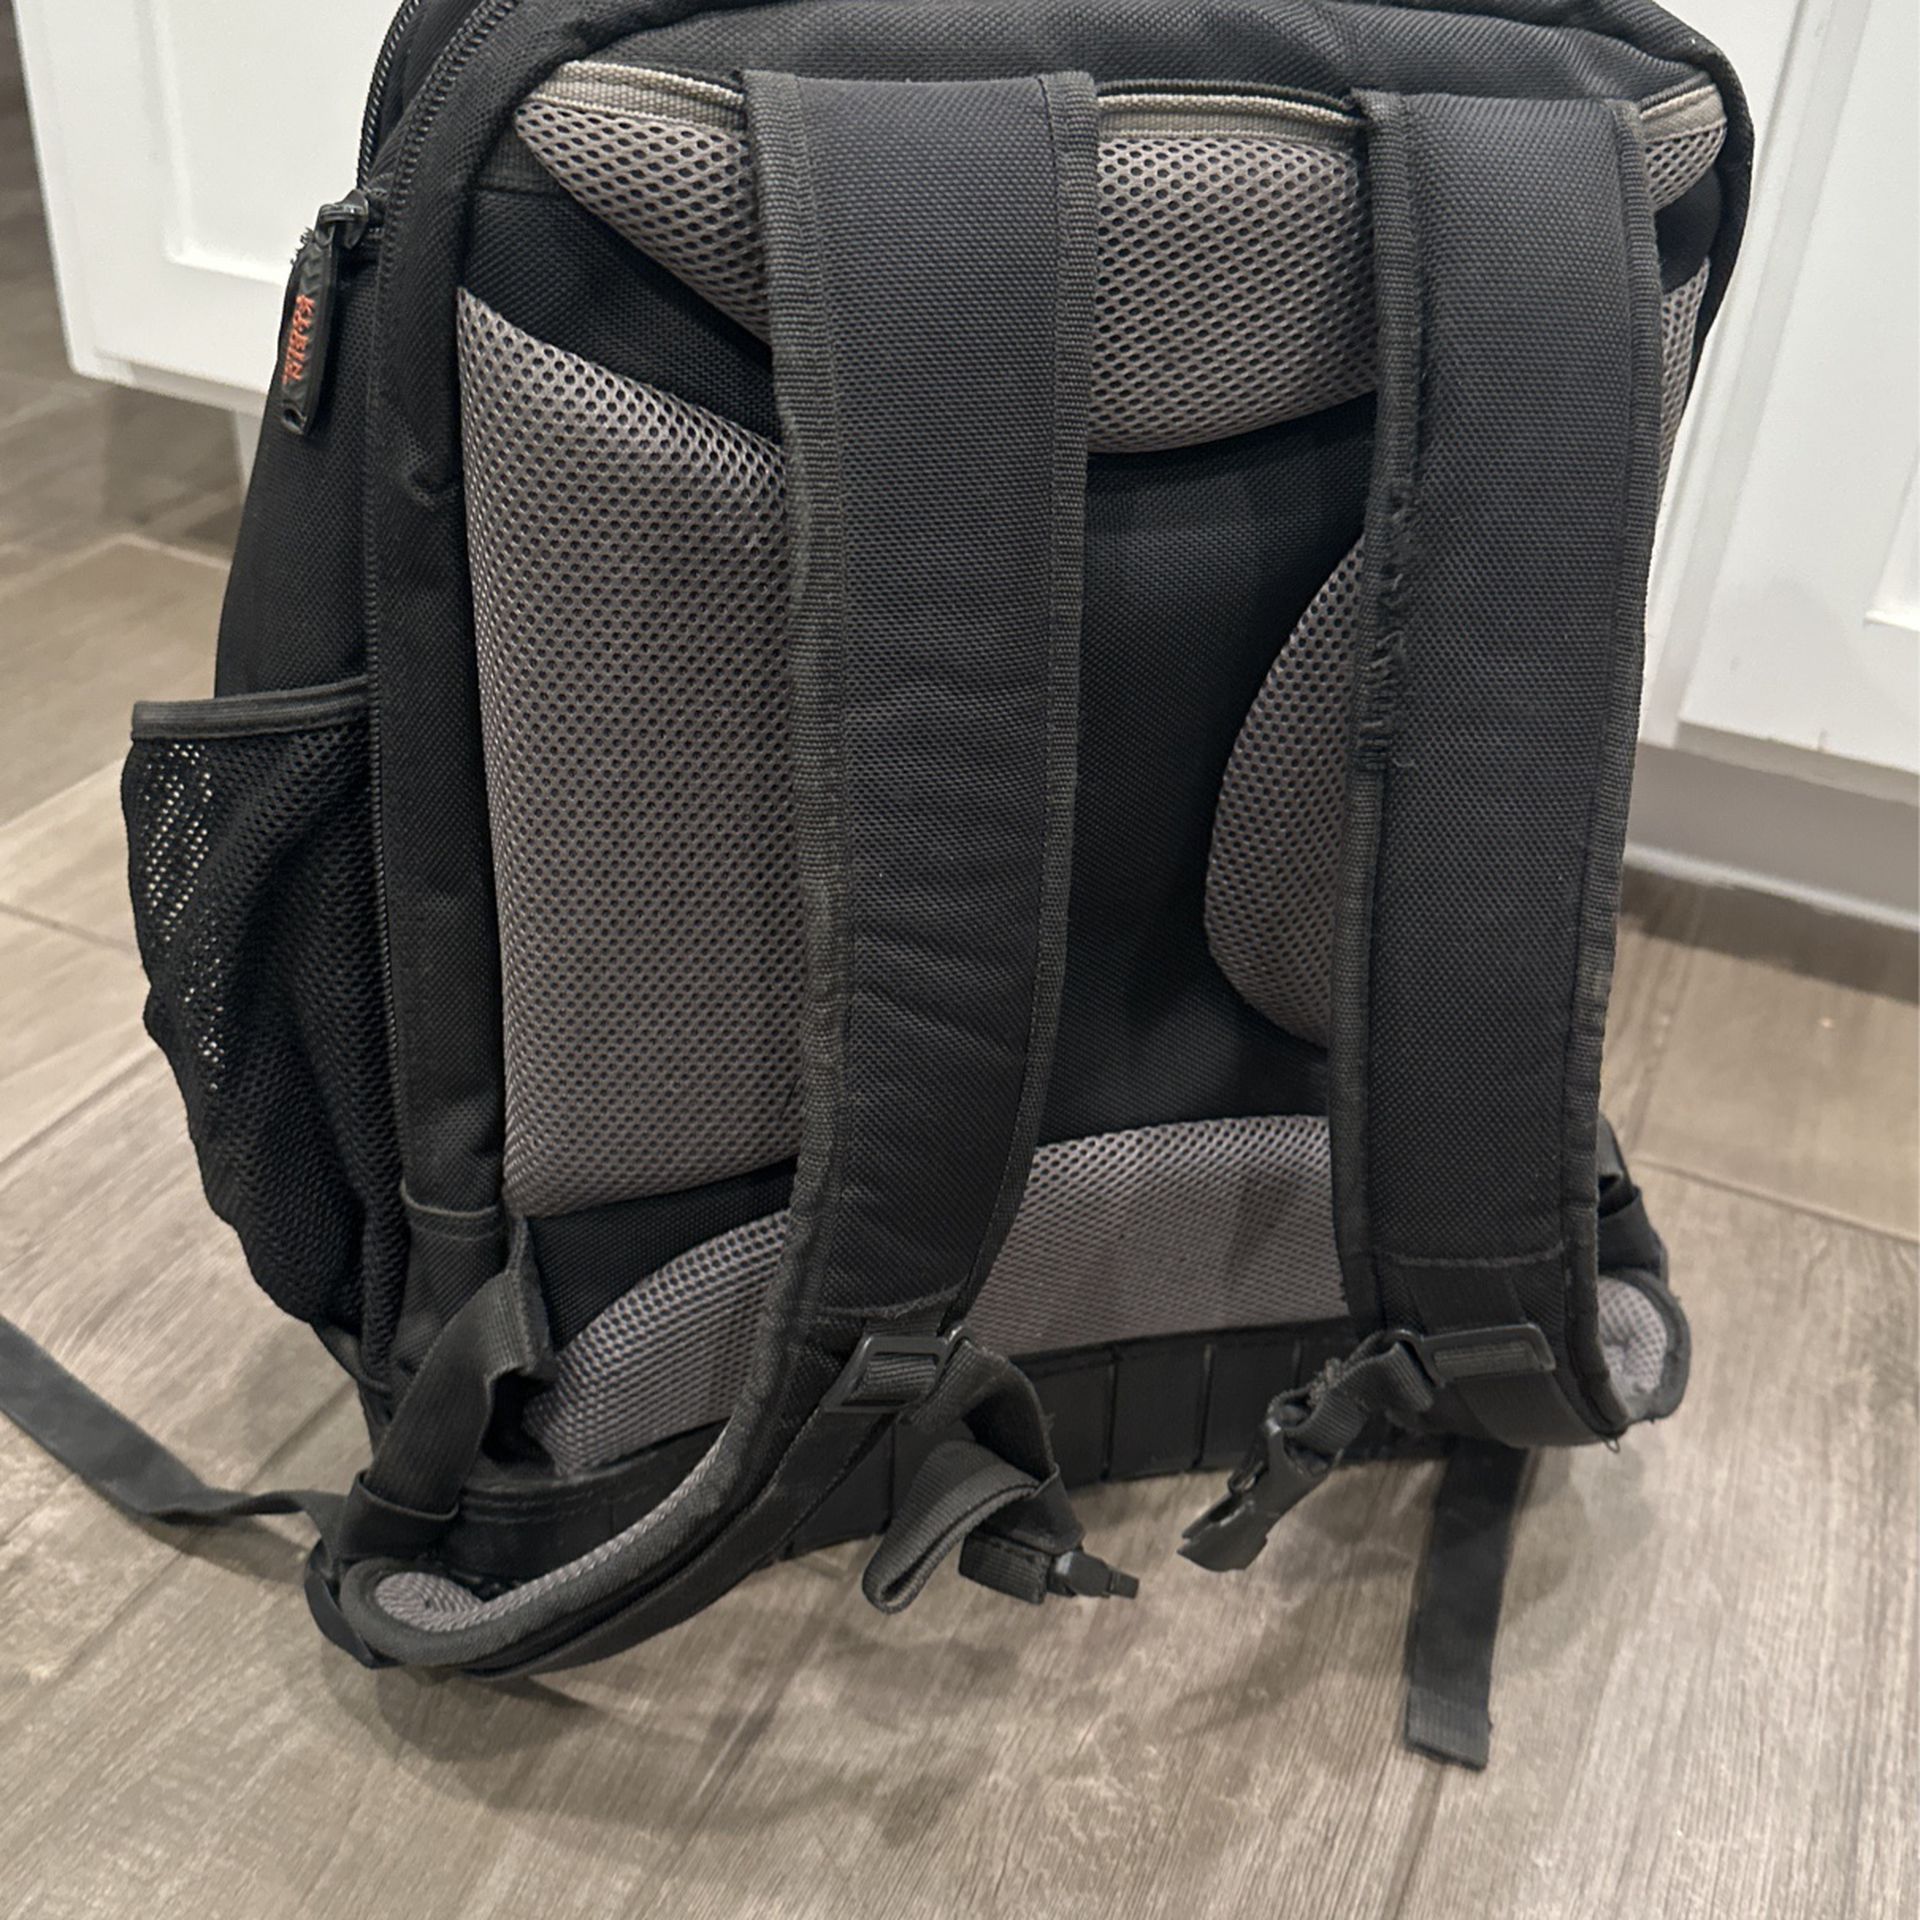 Klein backpack for Sale in Visalia, CA - OfferUp